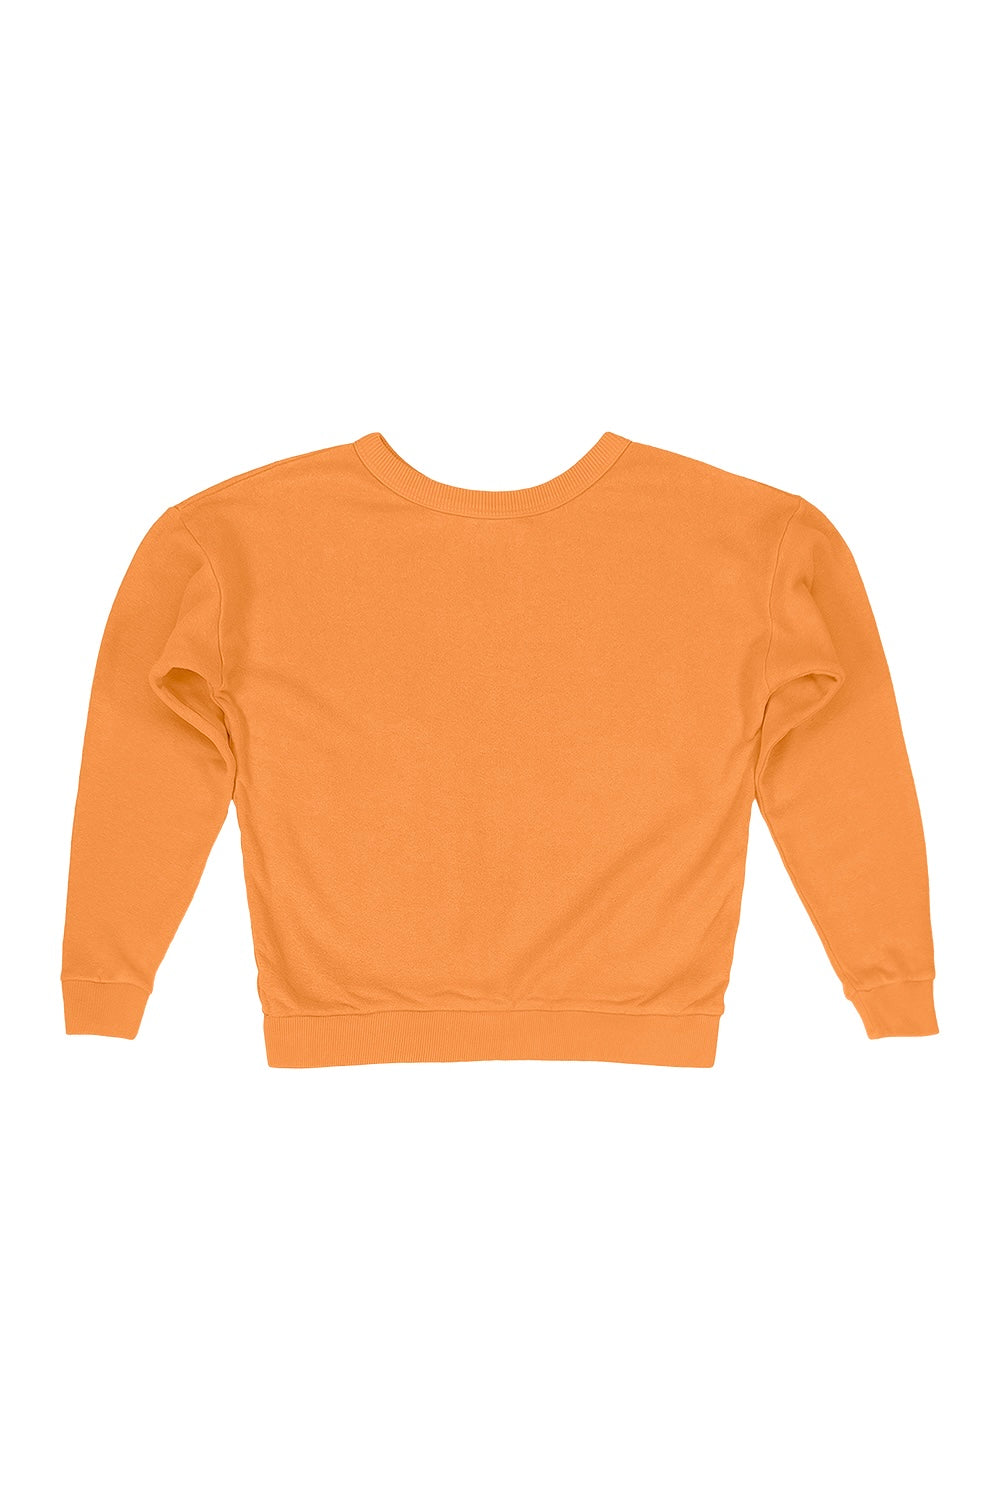 Crux Cropped Sweatshirt | Jungmaven Hemp Clothing & Accessories